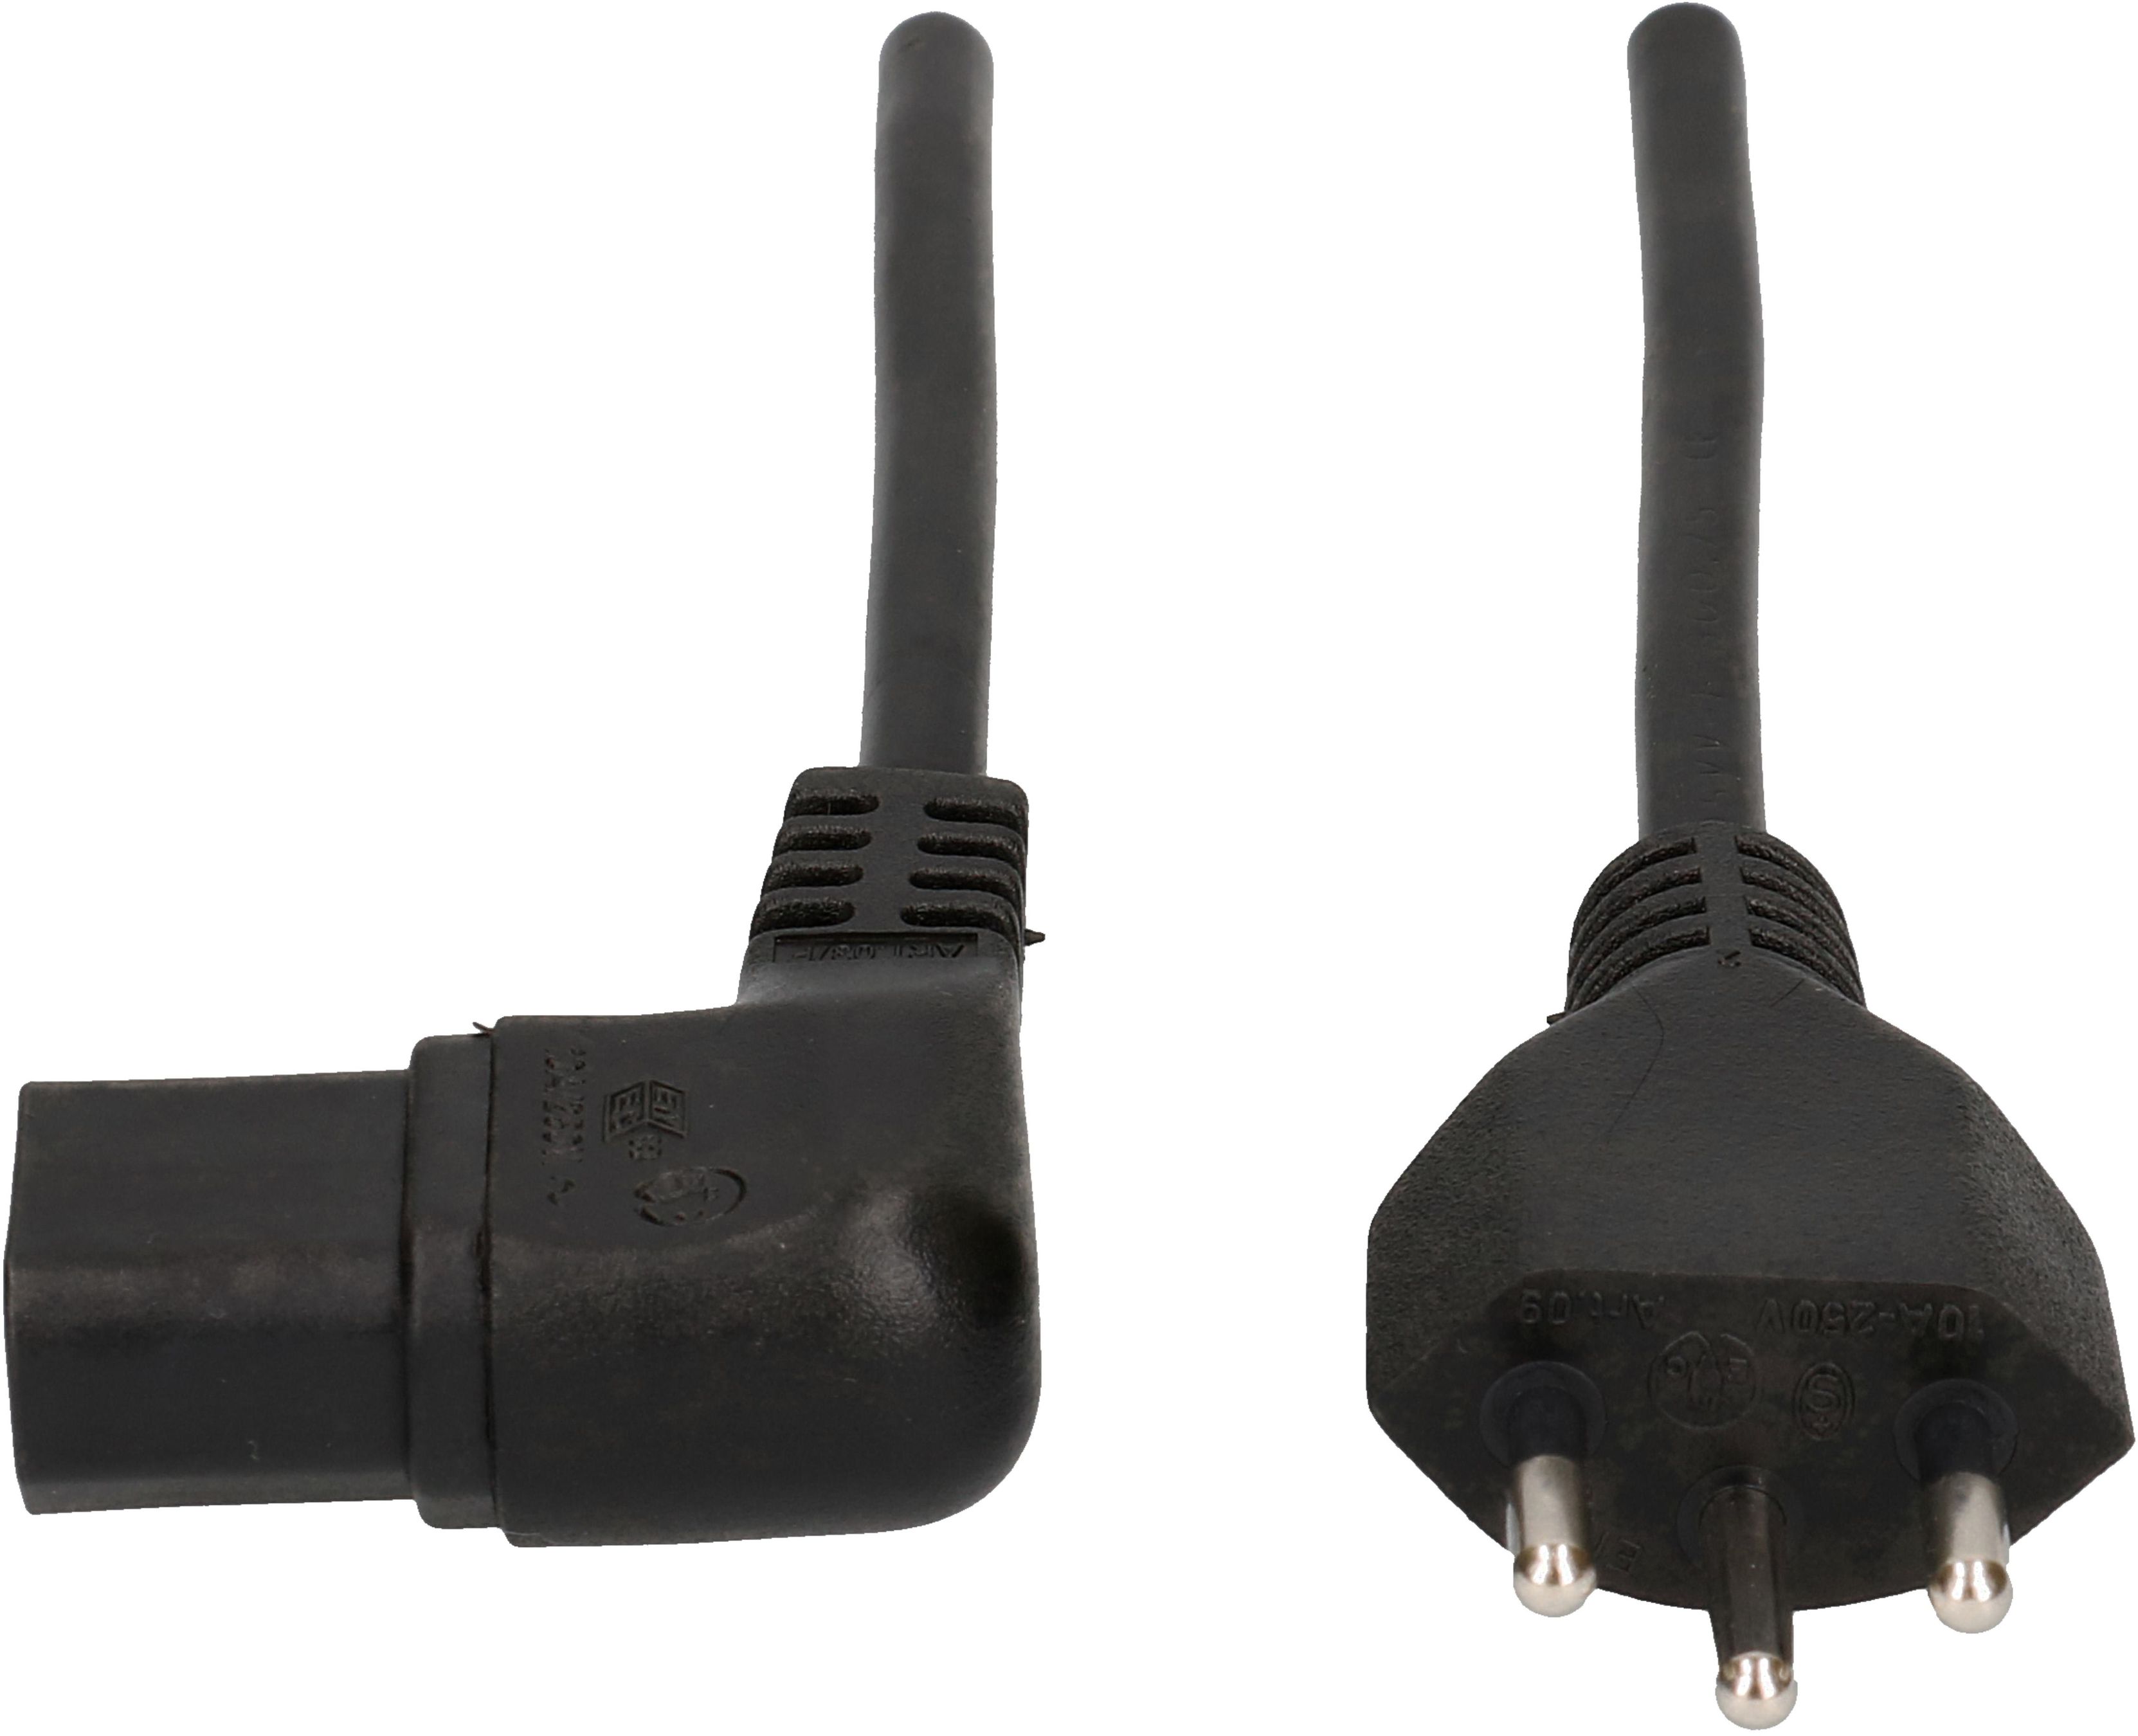 Cable cordset TD H05VV-F3G0.75 2m black type 12/C13